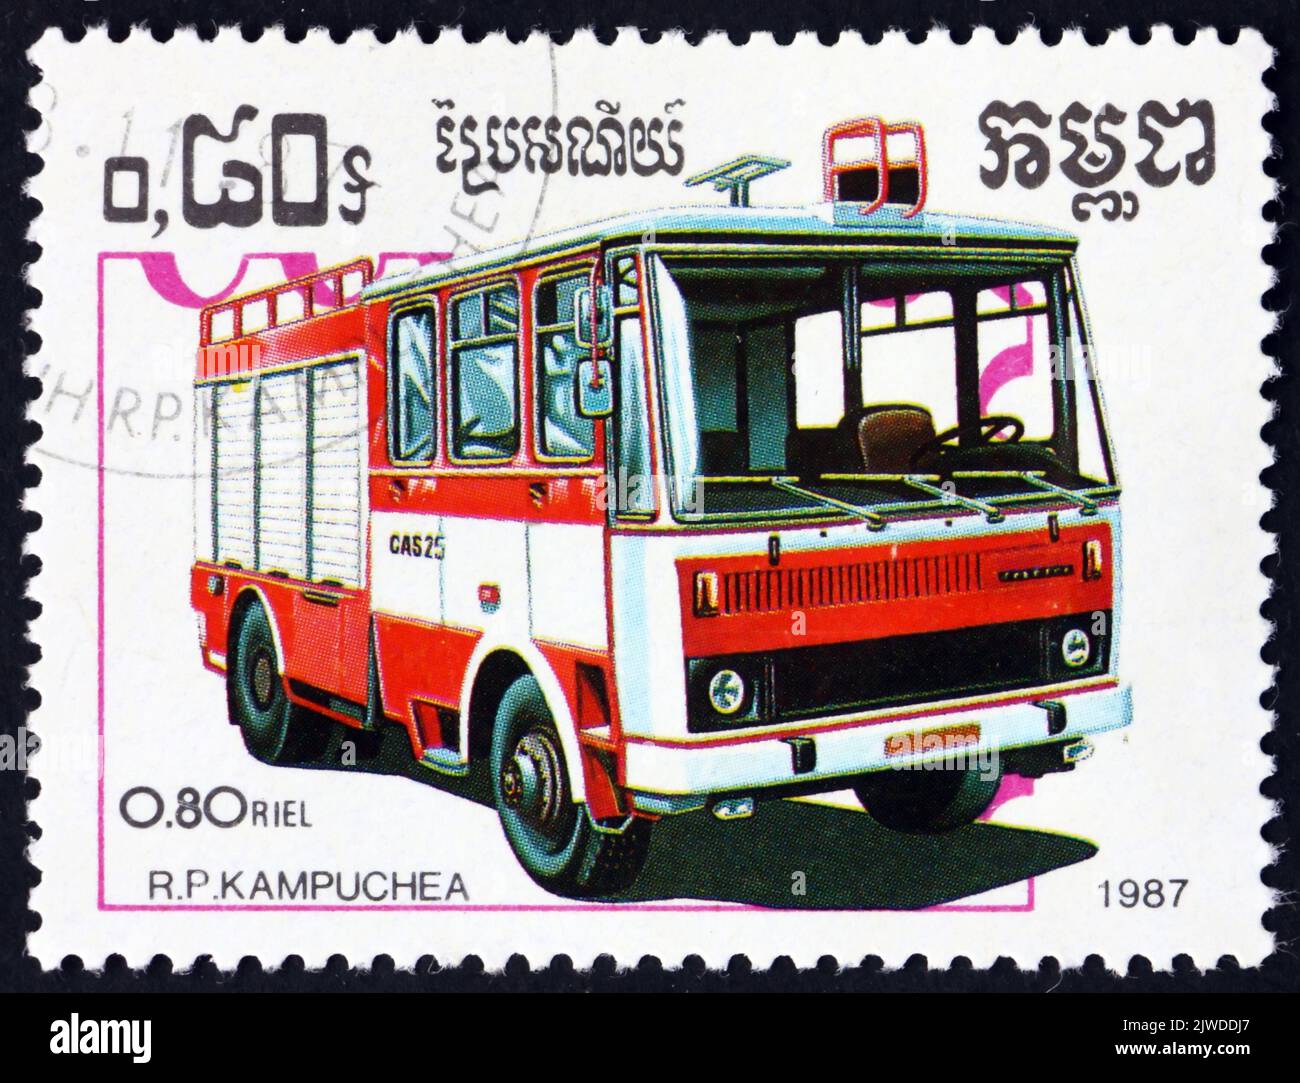 CAMBODIA - CIRCA 1987: a stamp printed in Cambodia shows fire truck, fire fighting vehicle, circa 1987 Stock Photo